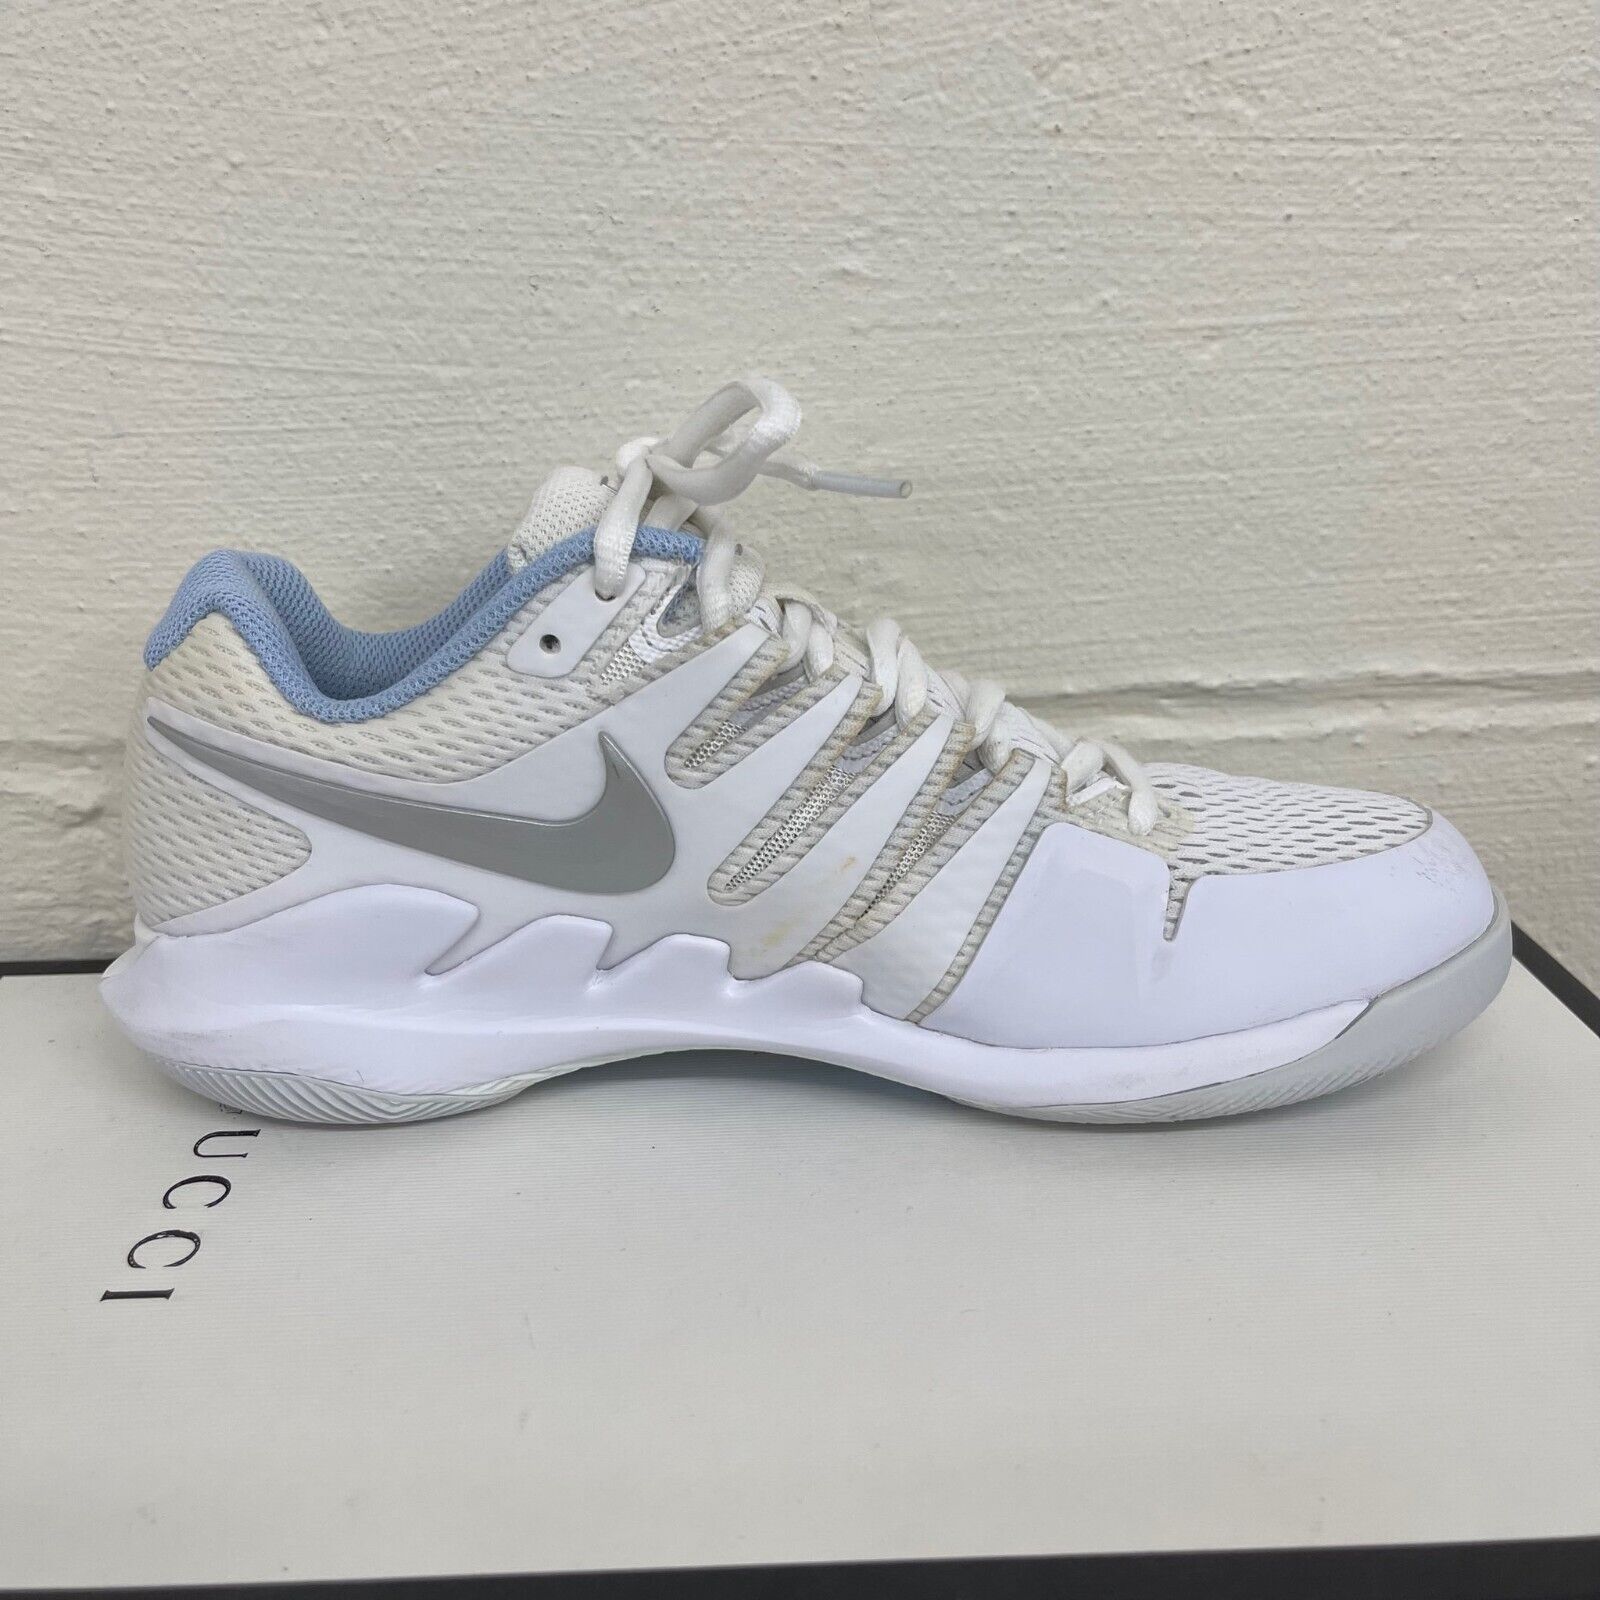 Nike Air Zoom Vapor X AA8027-105 White Mettalic Silver Tennis Shoes Women's Sz 8